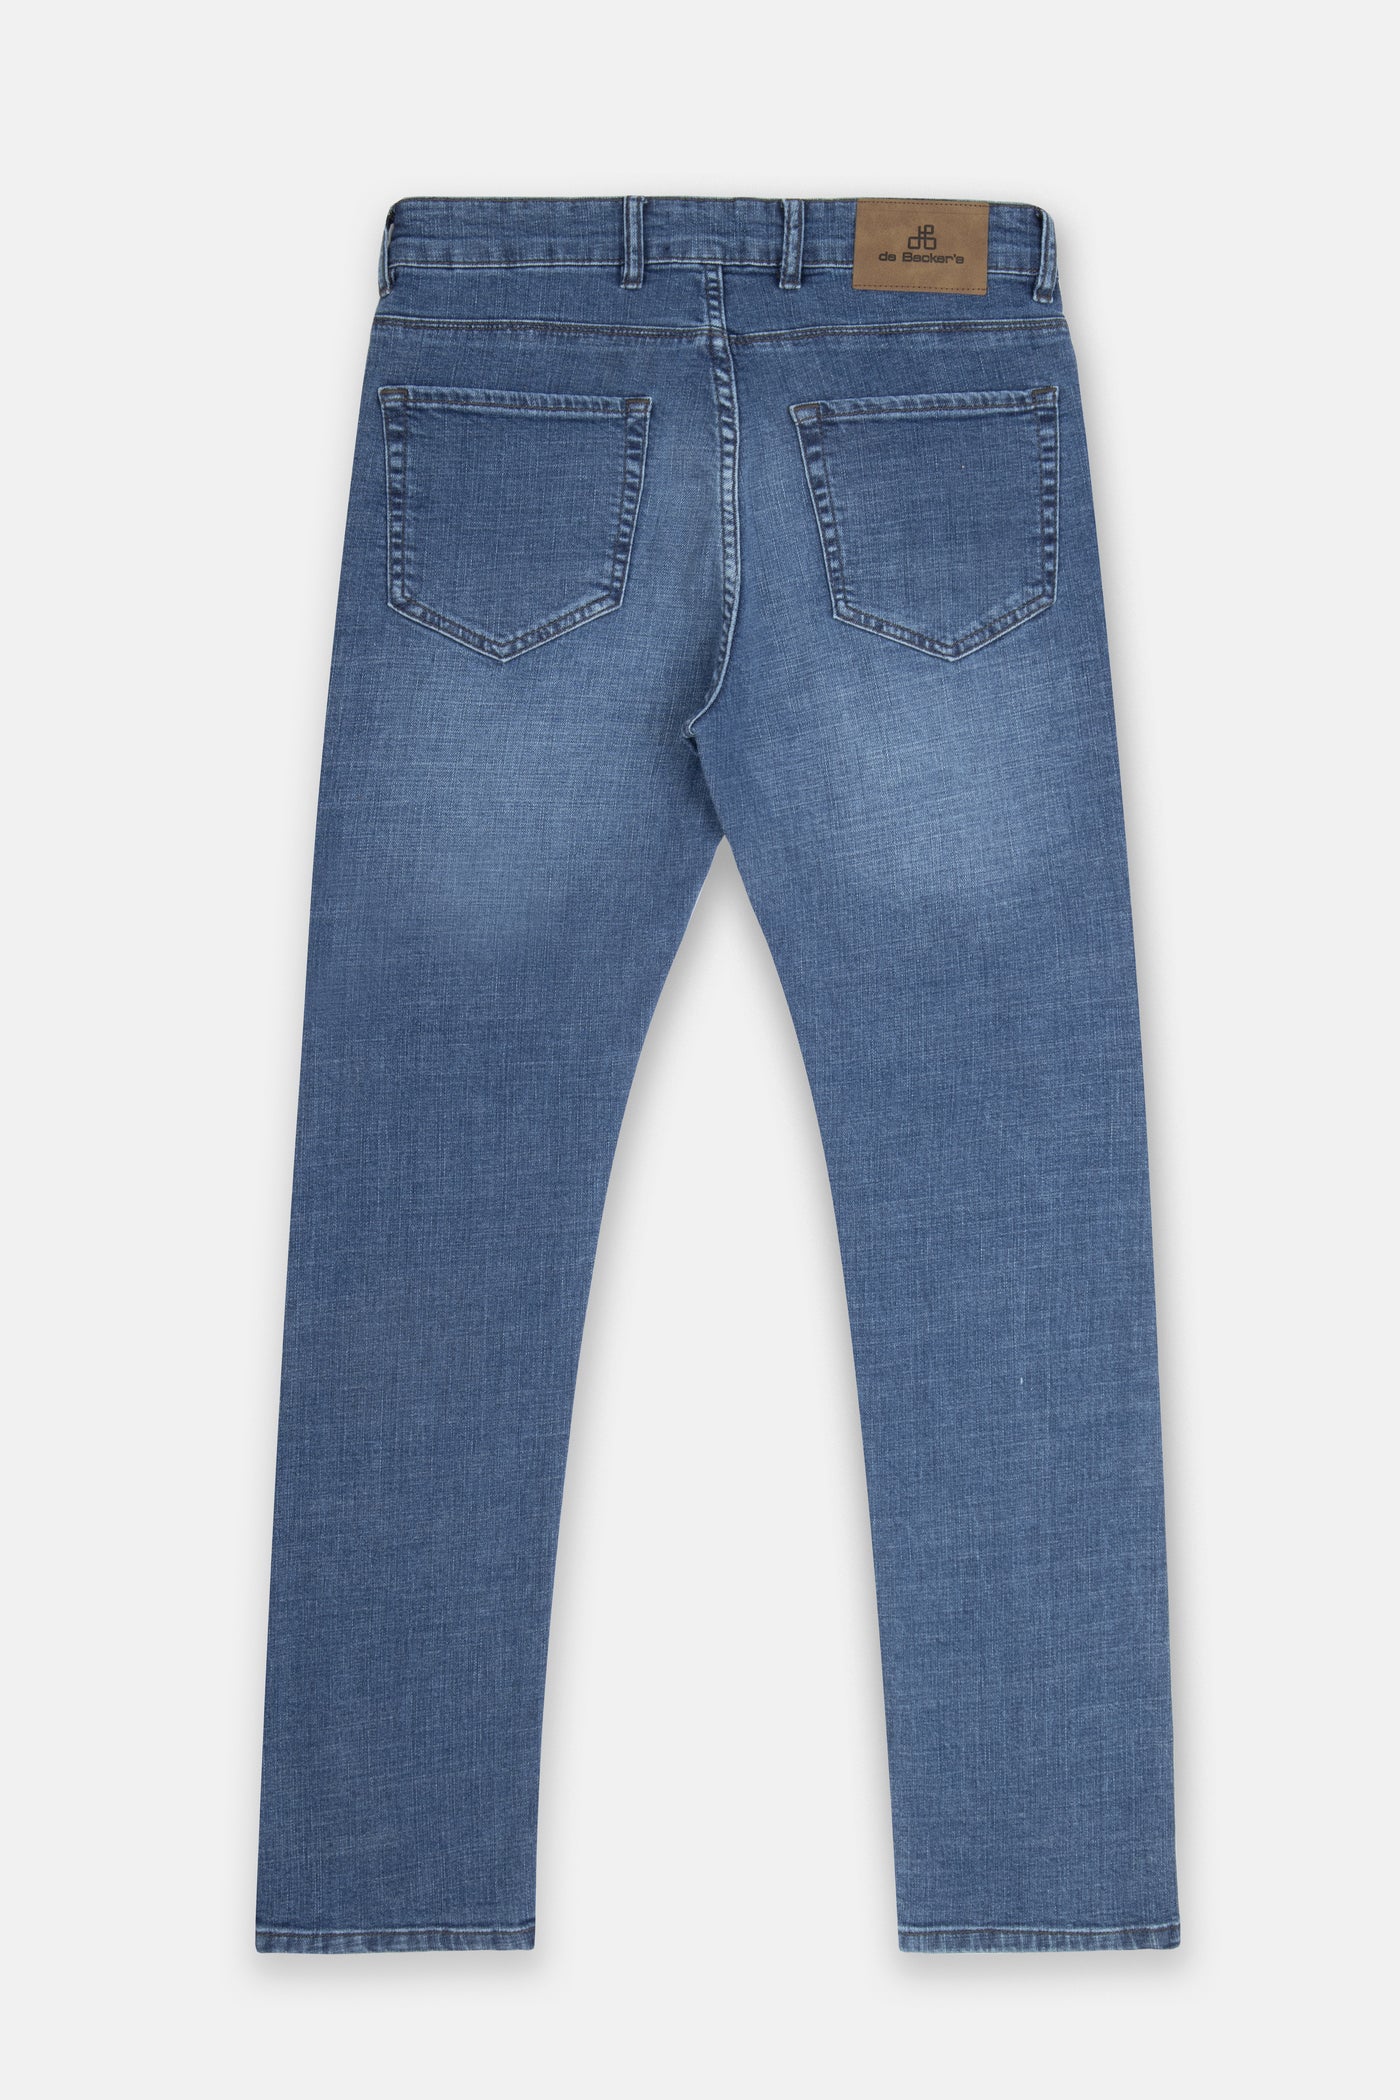 Original Blue Jeans